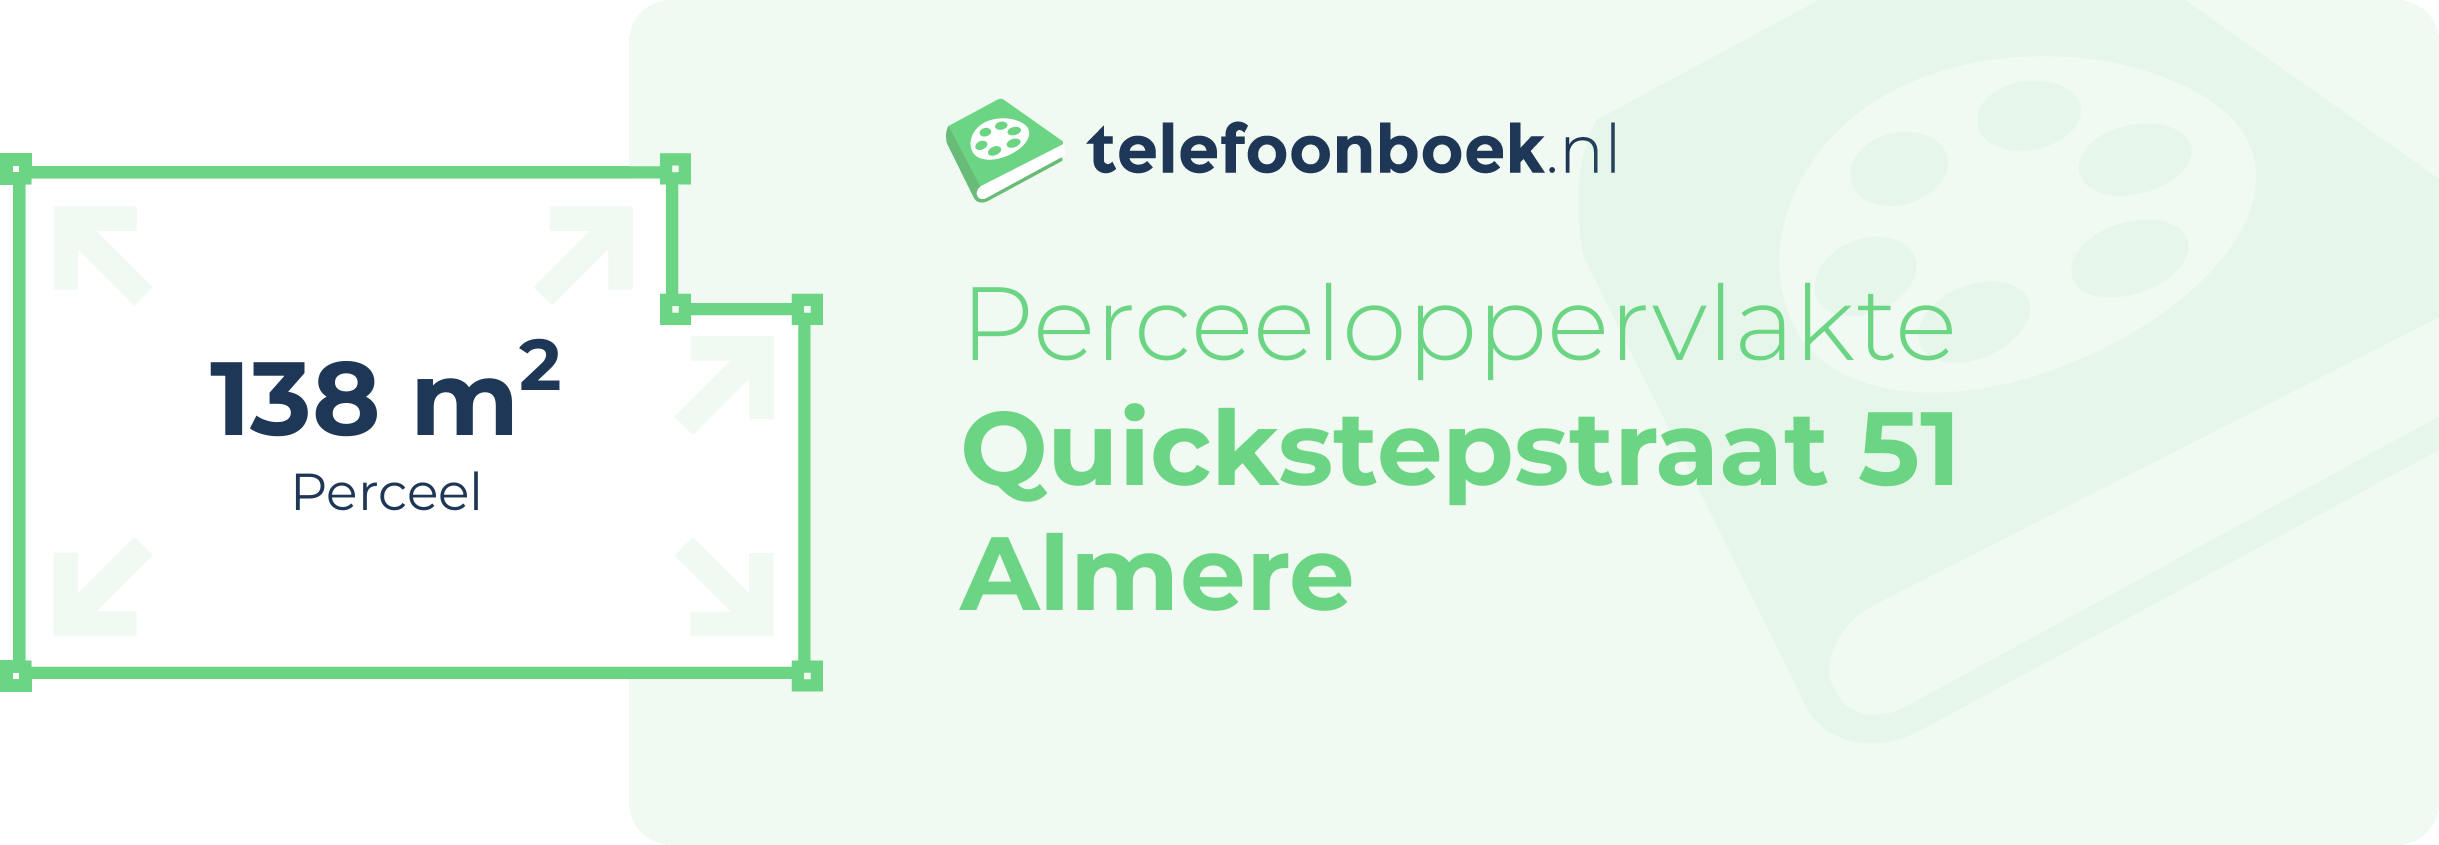 Perceeloppervlakte Quickstepstraat 51 Almere